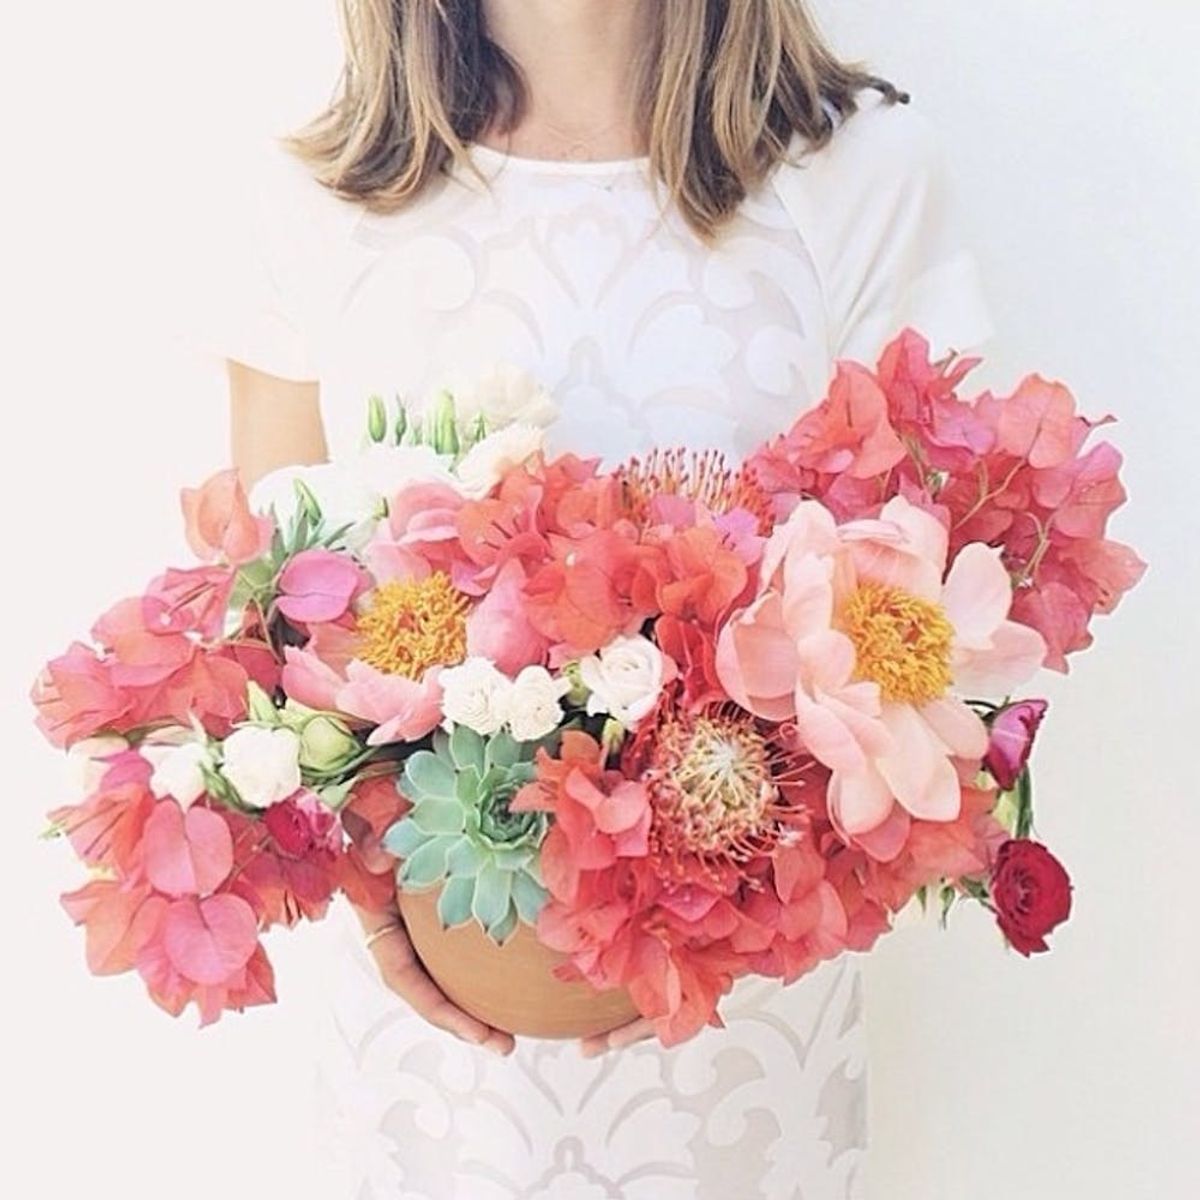 12 Beautiful Florists to Follow on Instagram